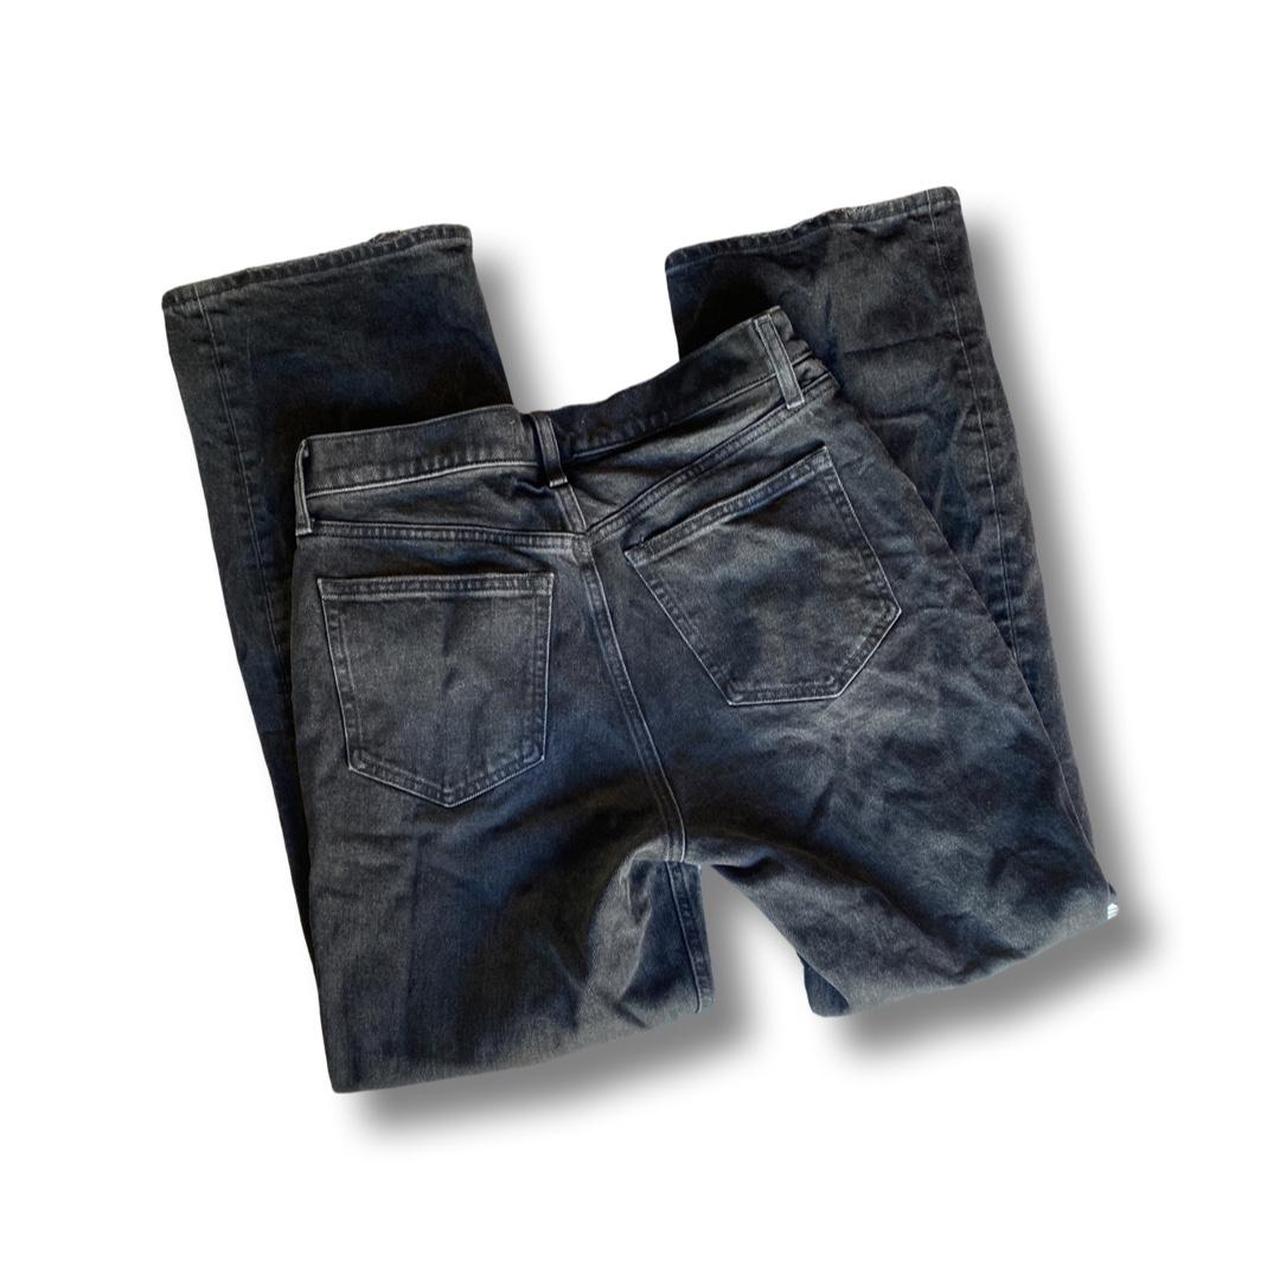 Abercrombie & Fitch Women's Black Jeans (2)